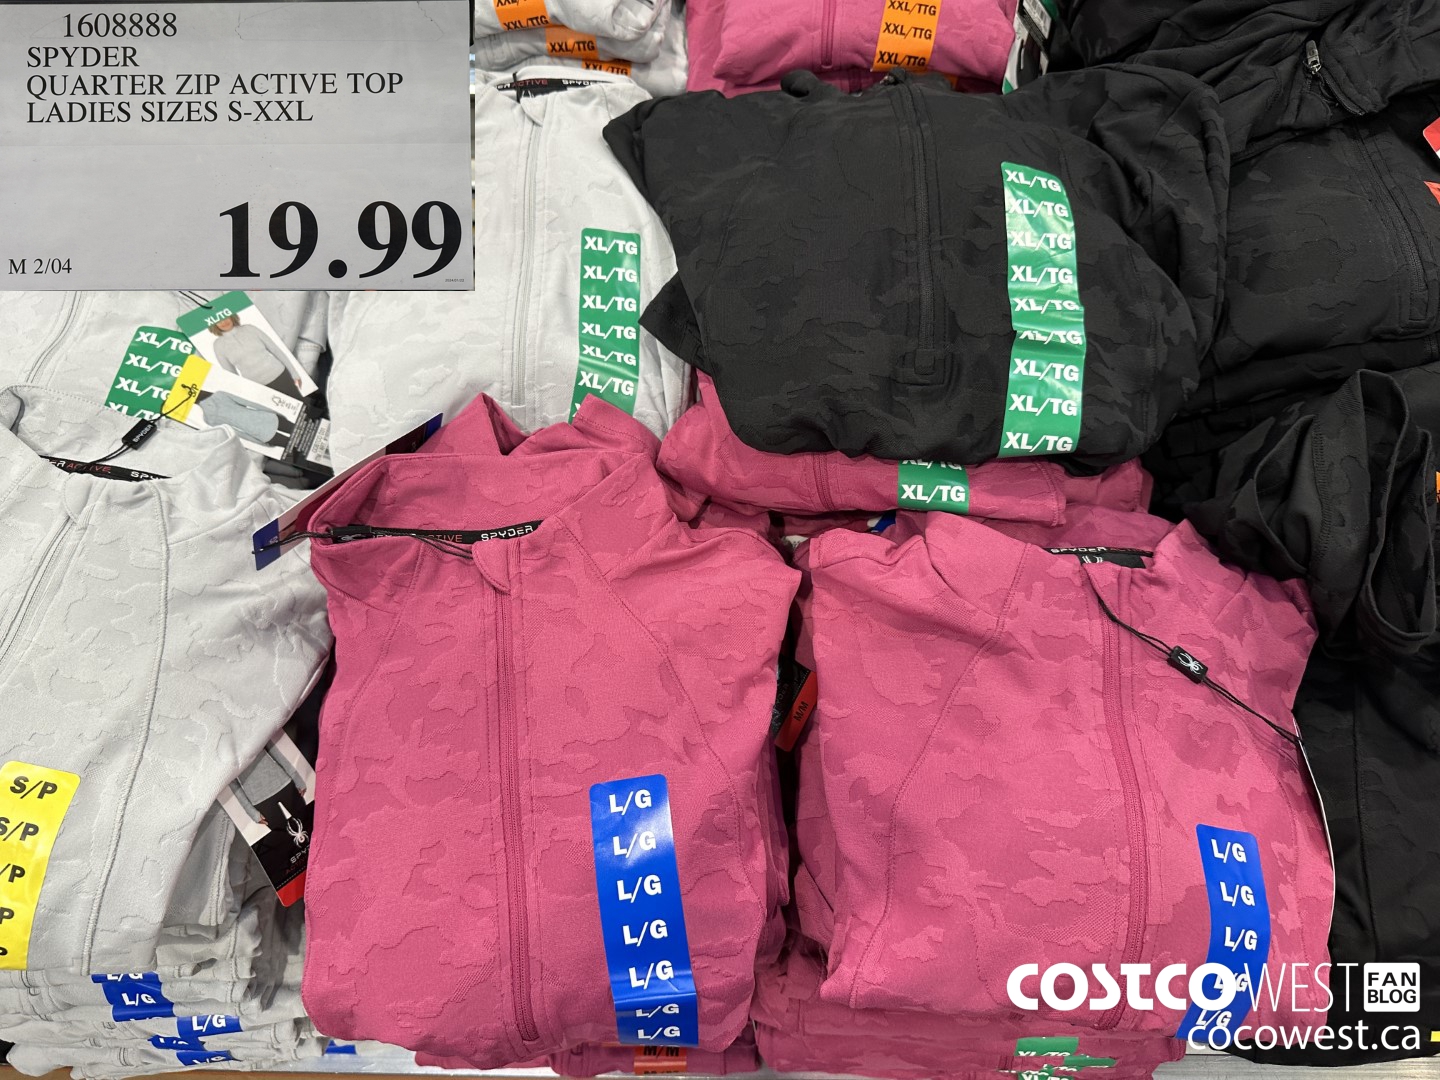 Puma ladies'sports bras, Costco deals this week, Costco flyer